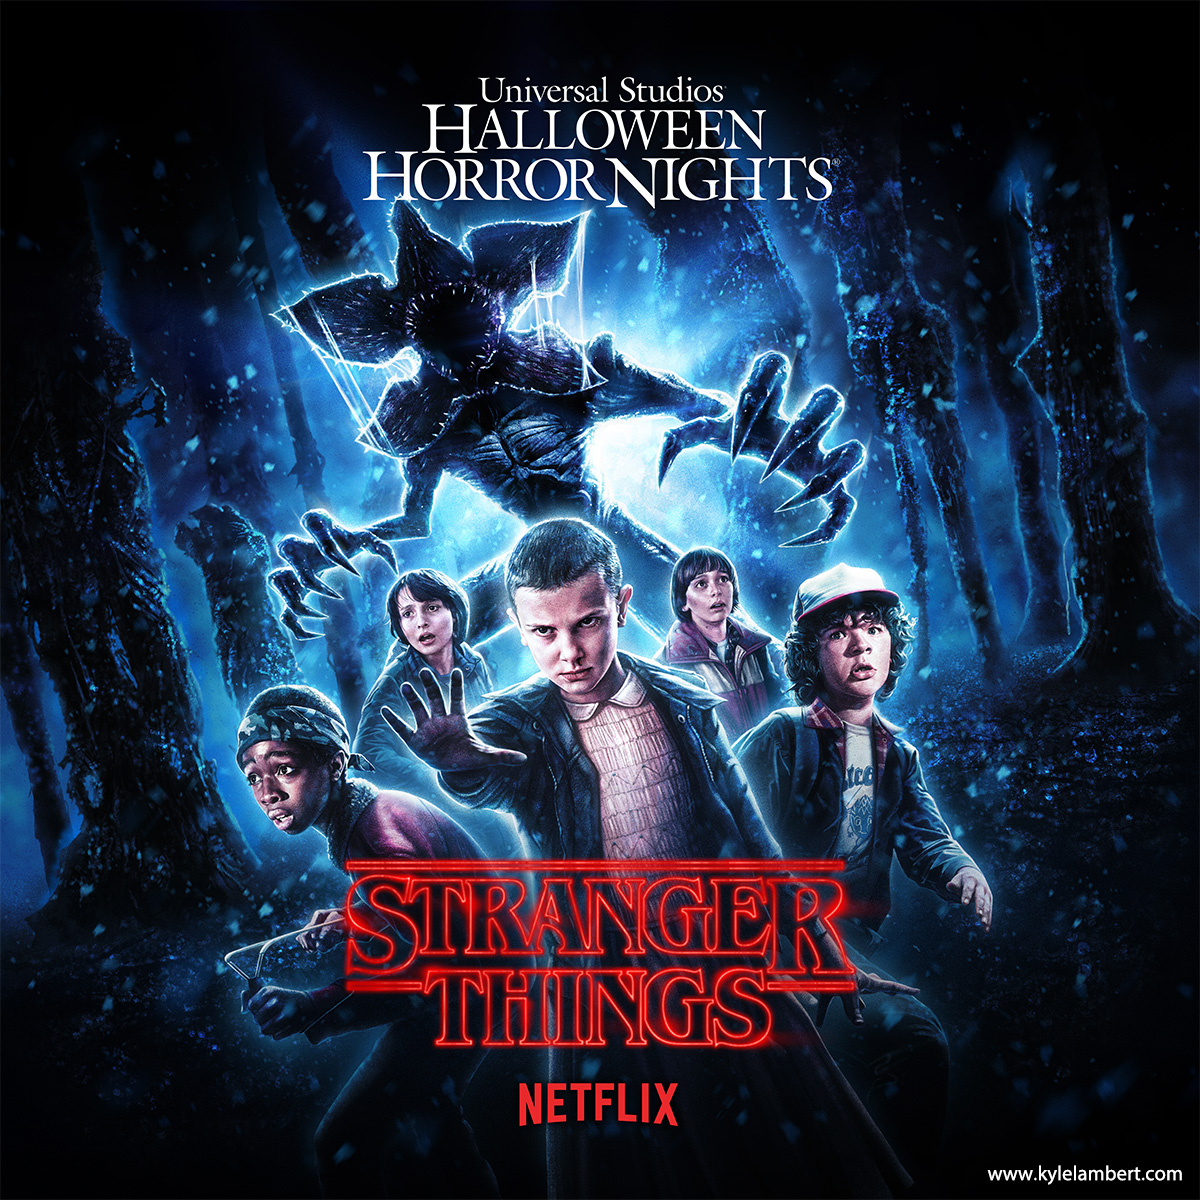 Stranger Things - Halloween Horror Nights - Universal Studios